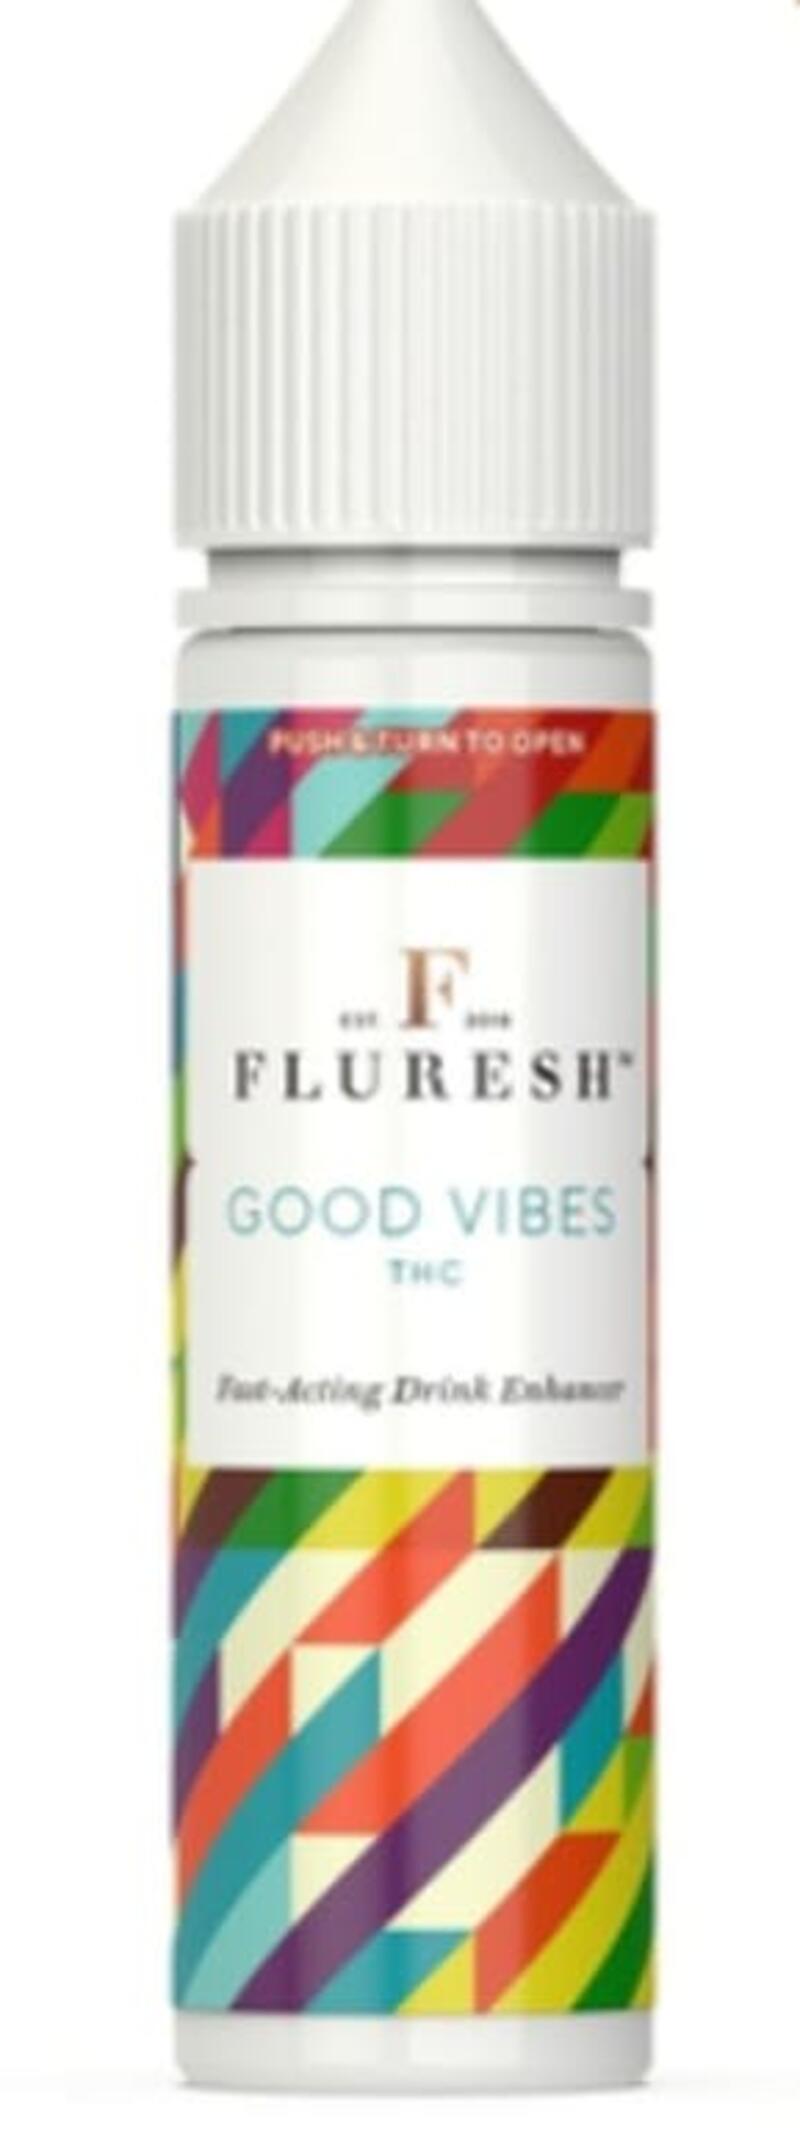 Fluresh: Good Vibes THC Drink Enhancer